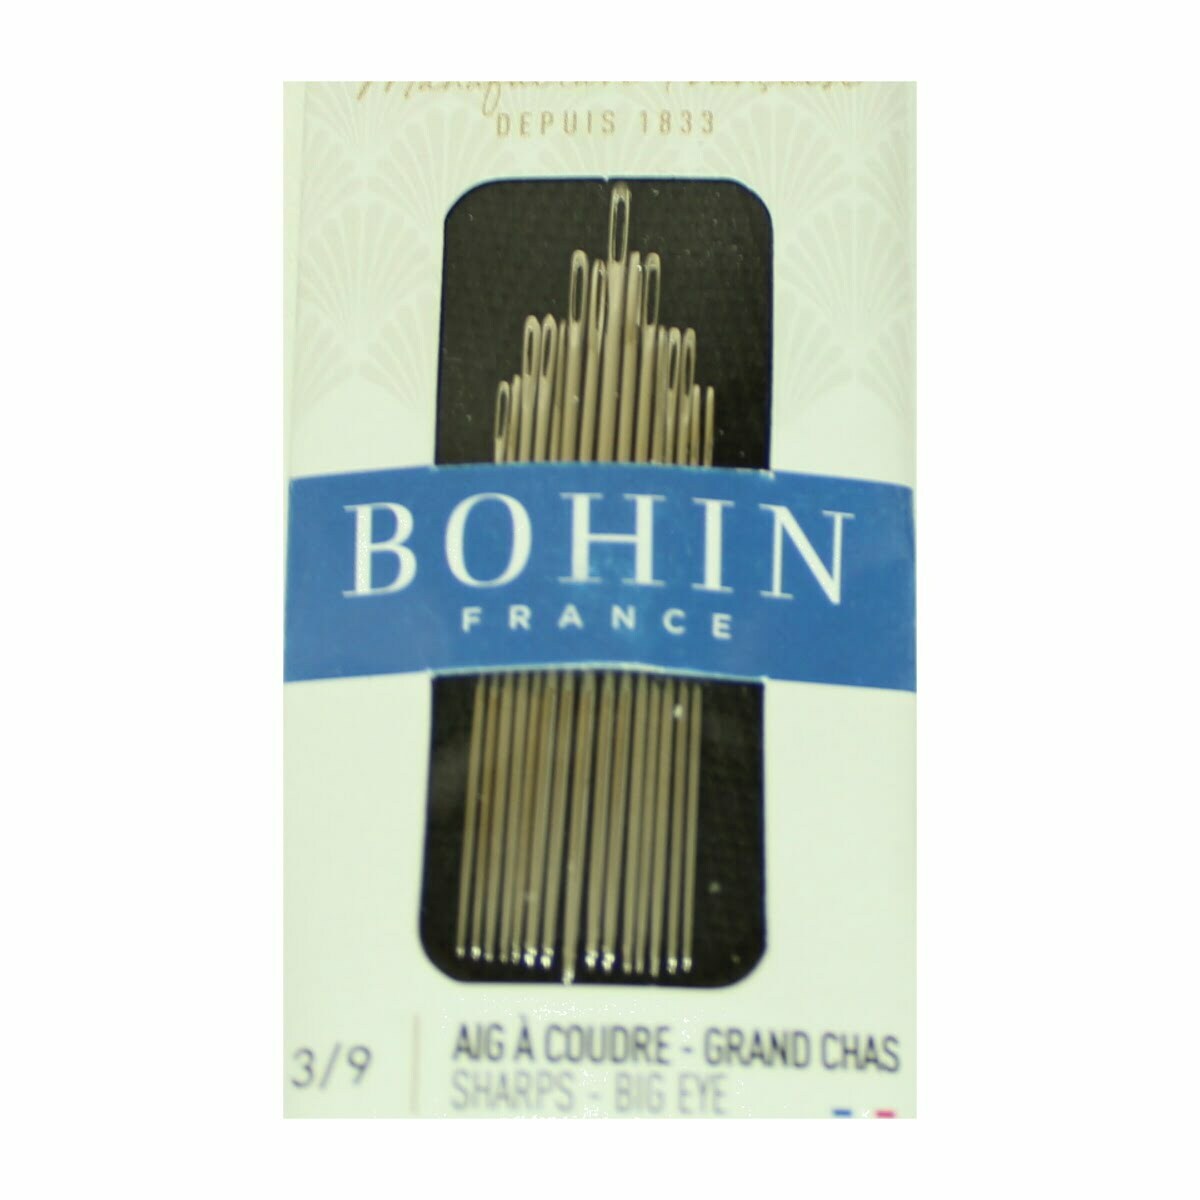 Bohin Big Eye Sharp 3/9 Needles